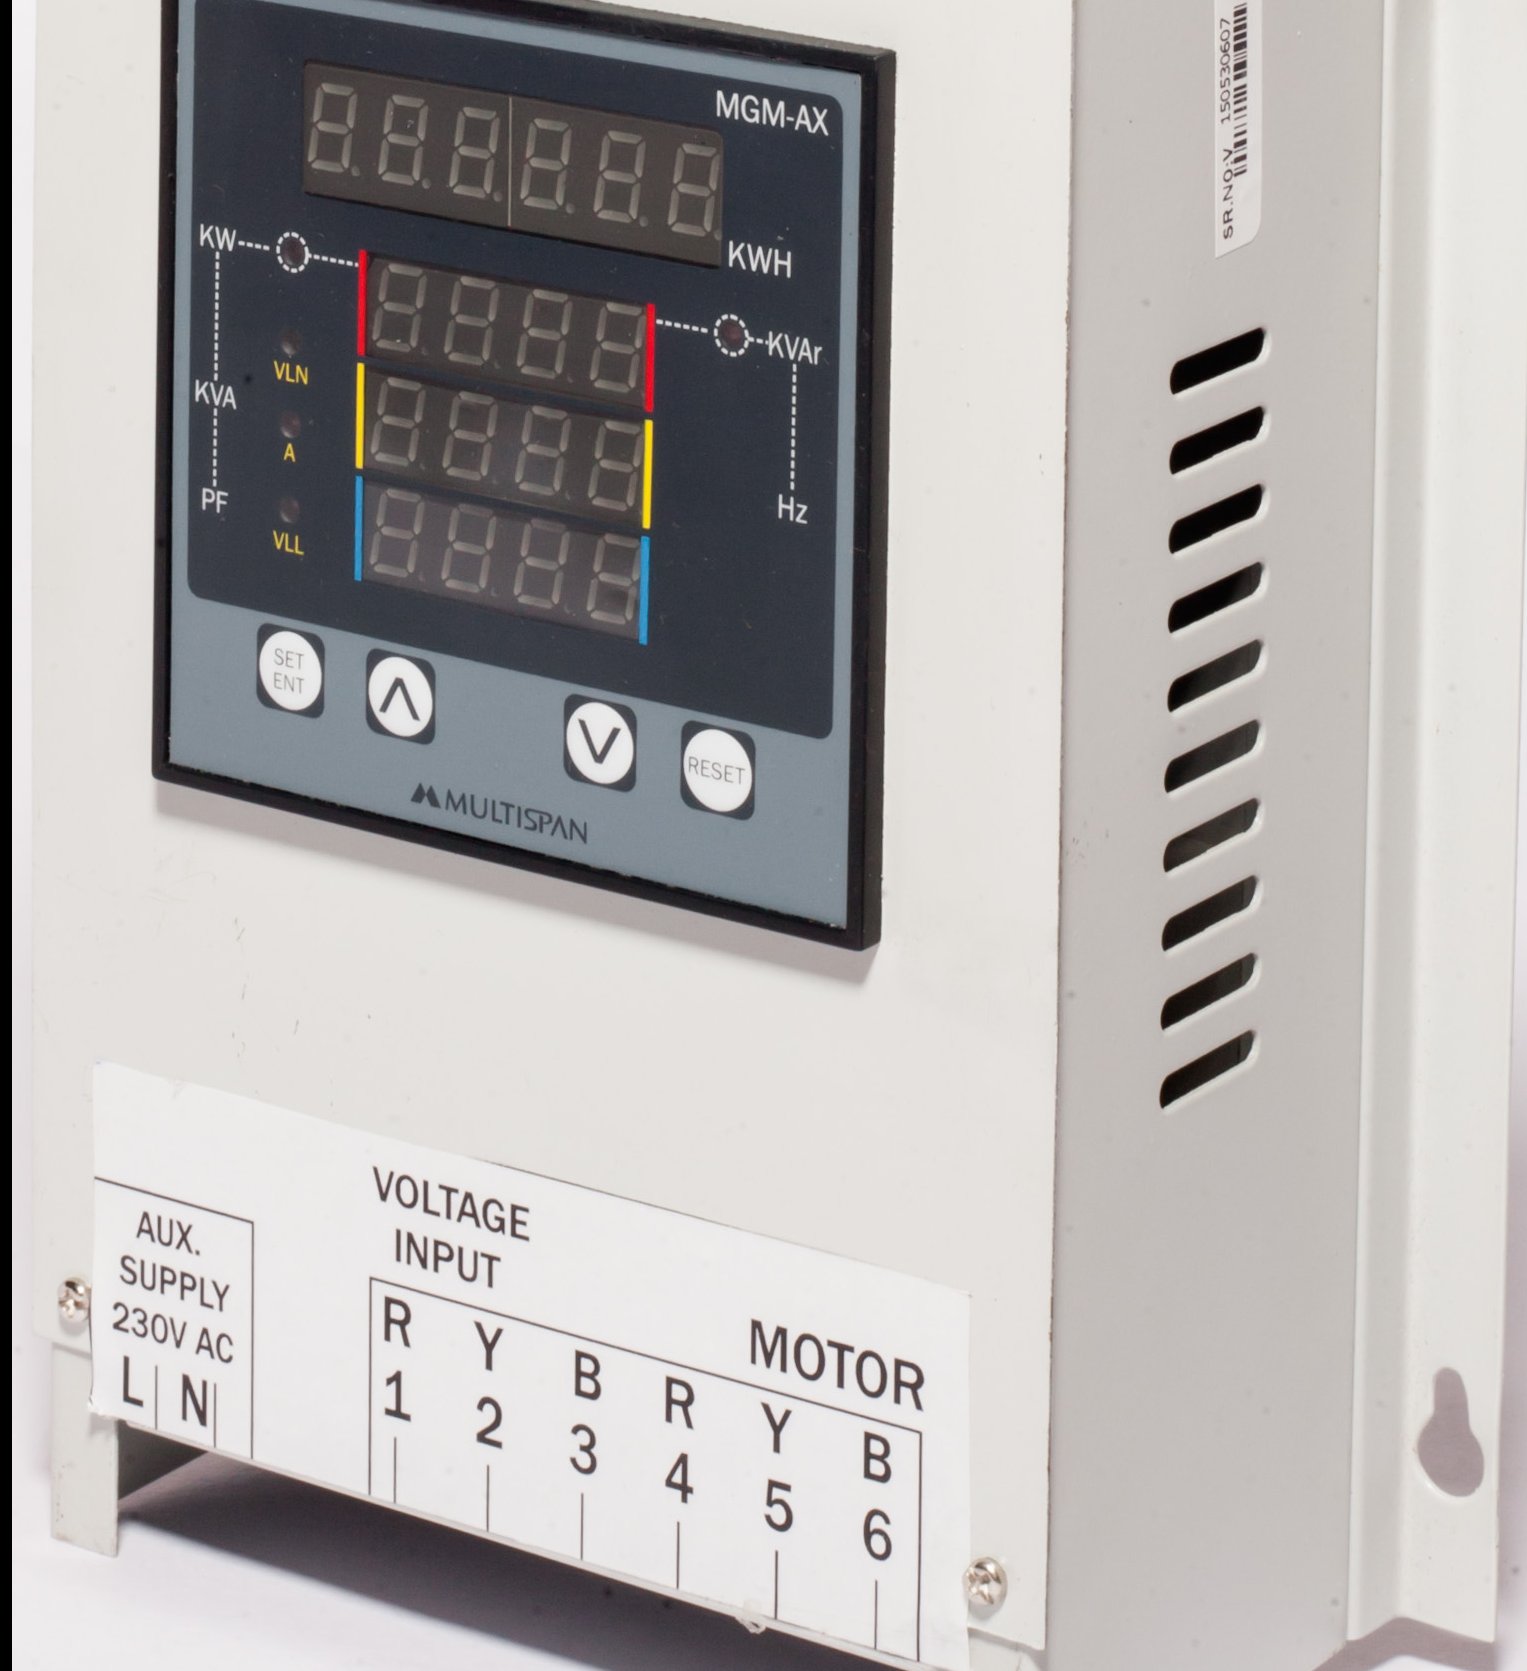 Multi-Function meter panel